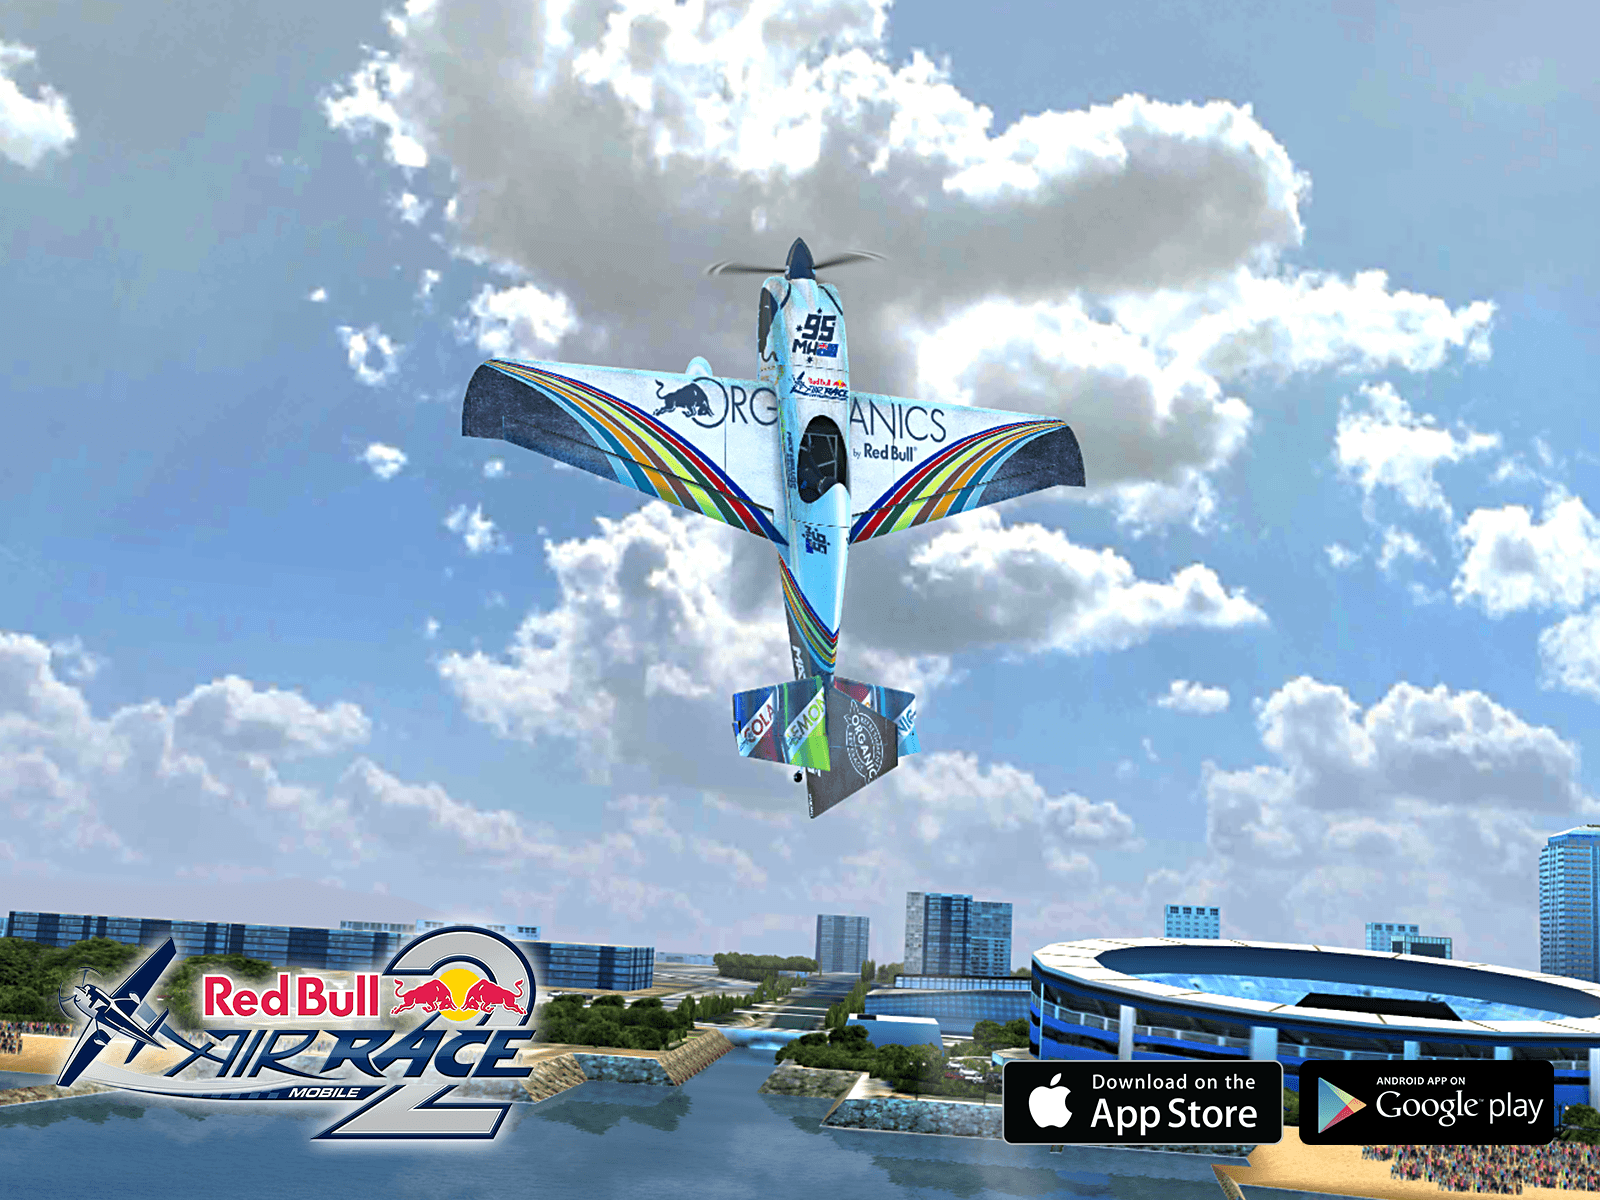 Red Bull Air Race Mobile Game 2. Red Bull Air Race